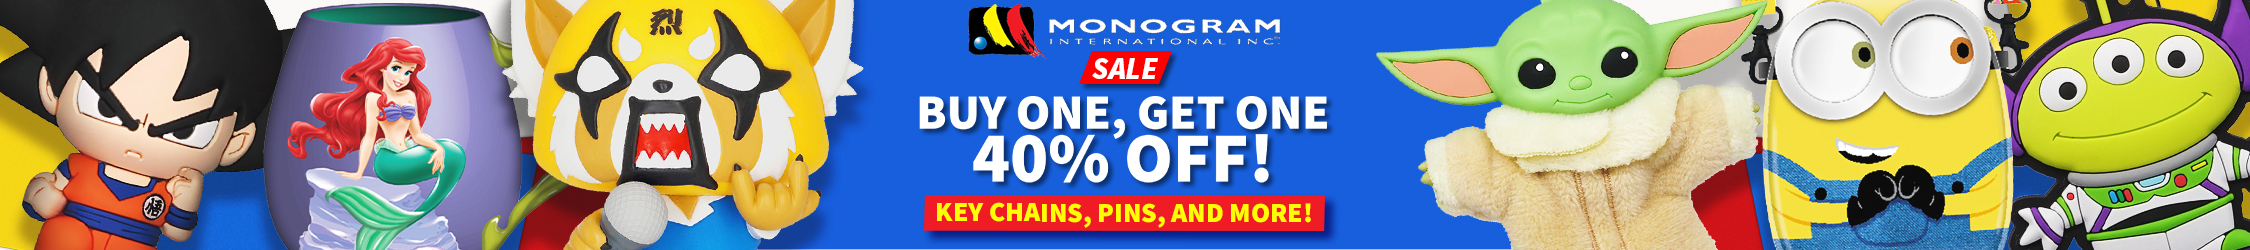 Monogram Buy One Get One 40% Off